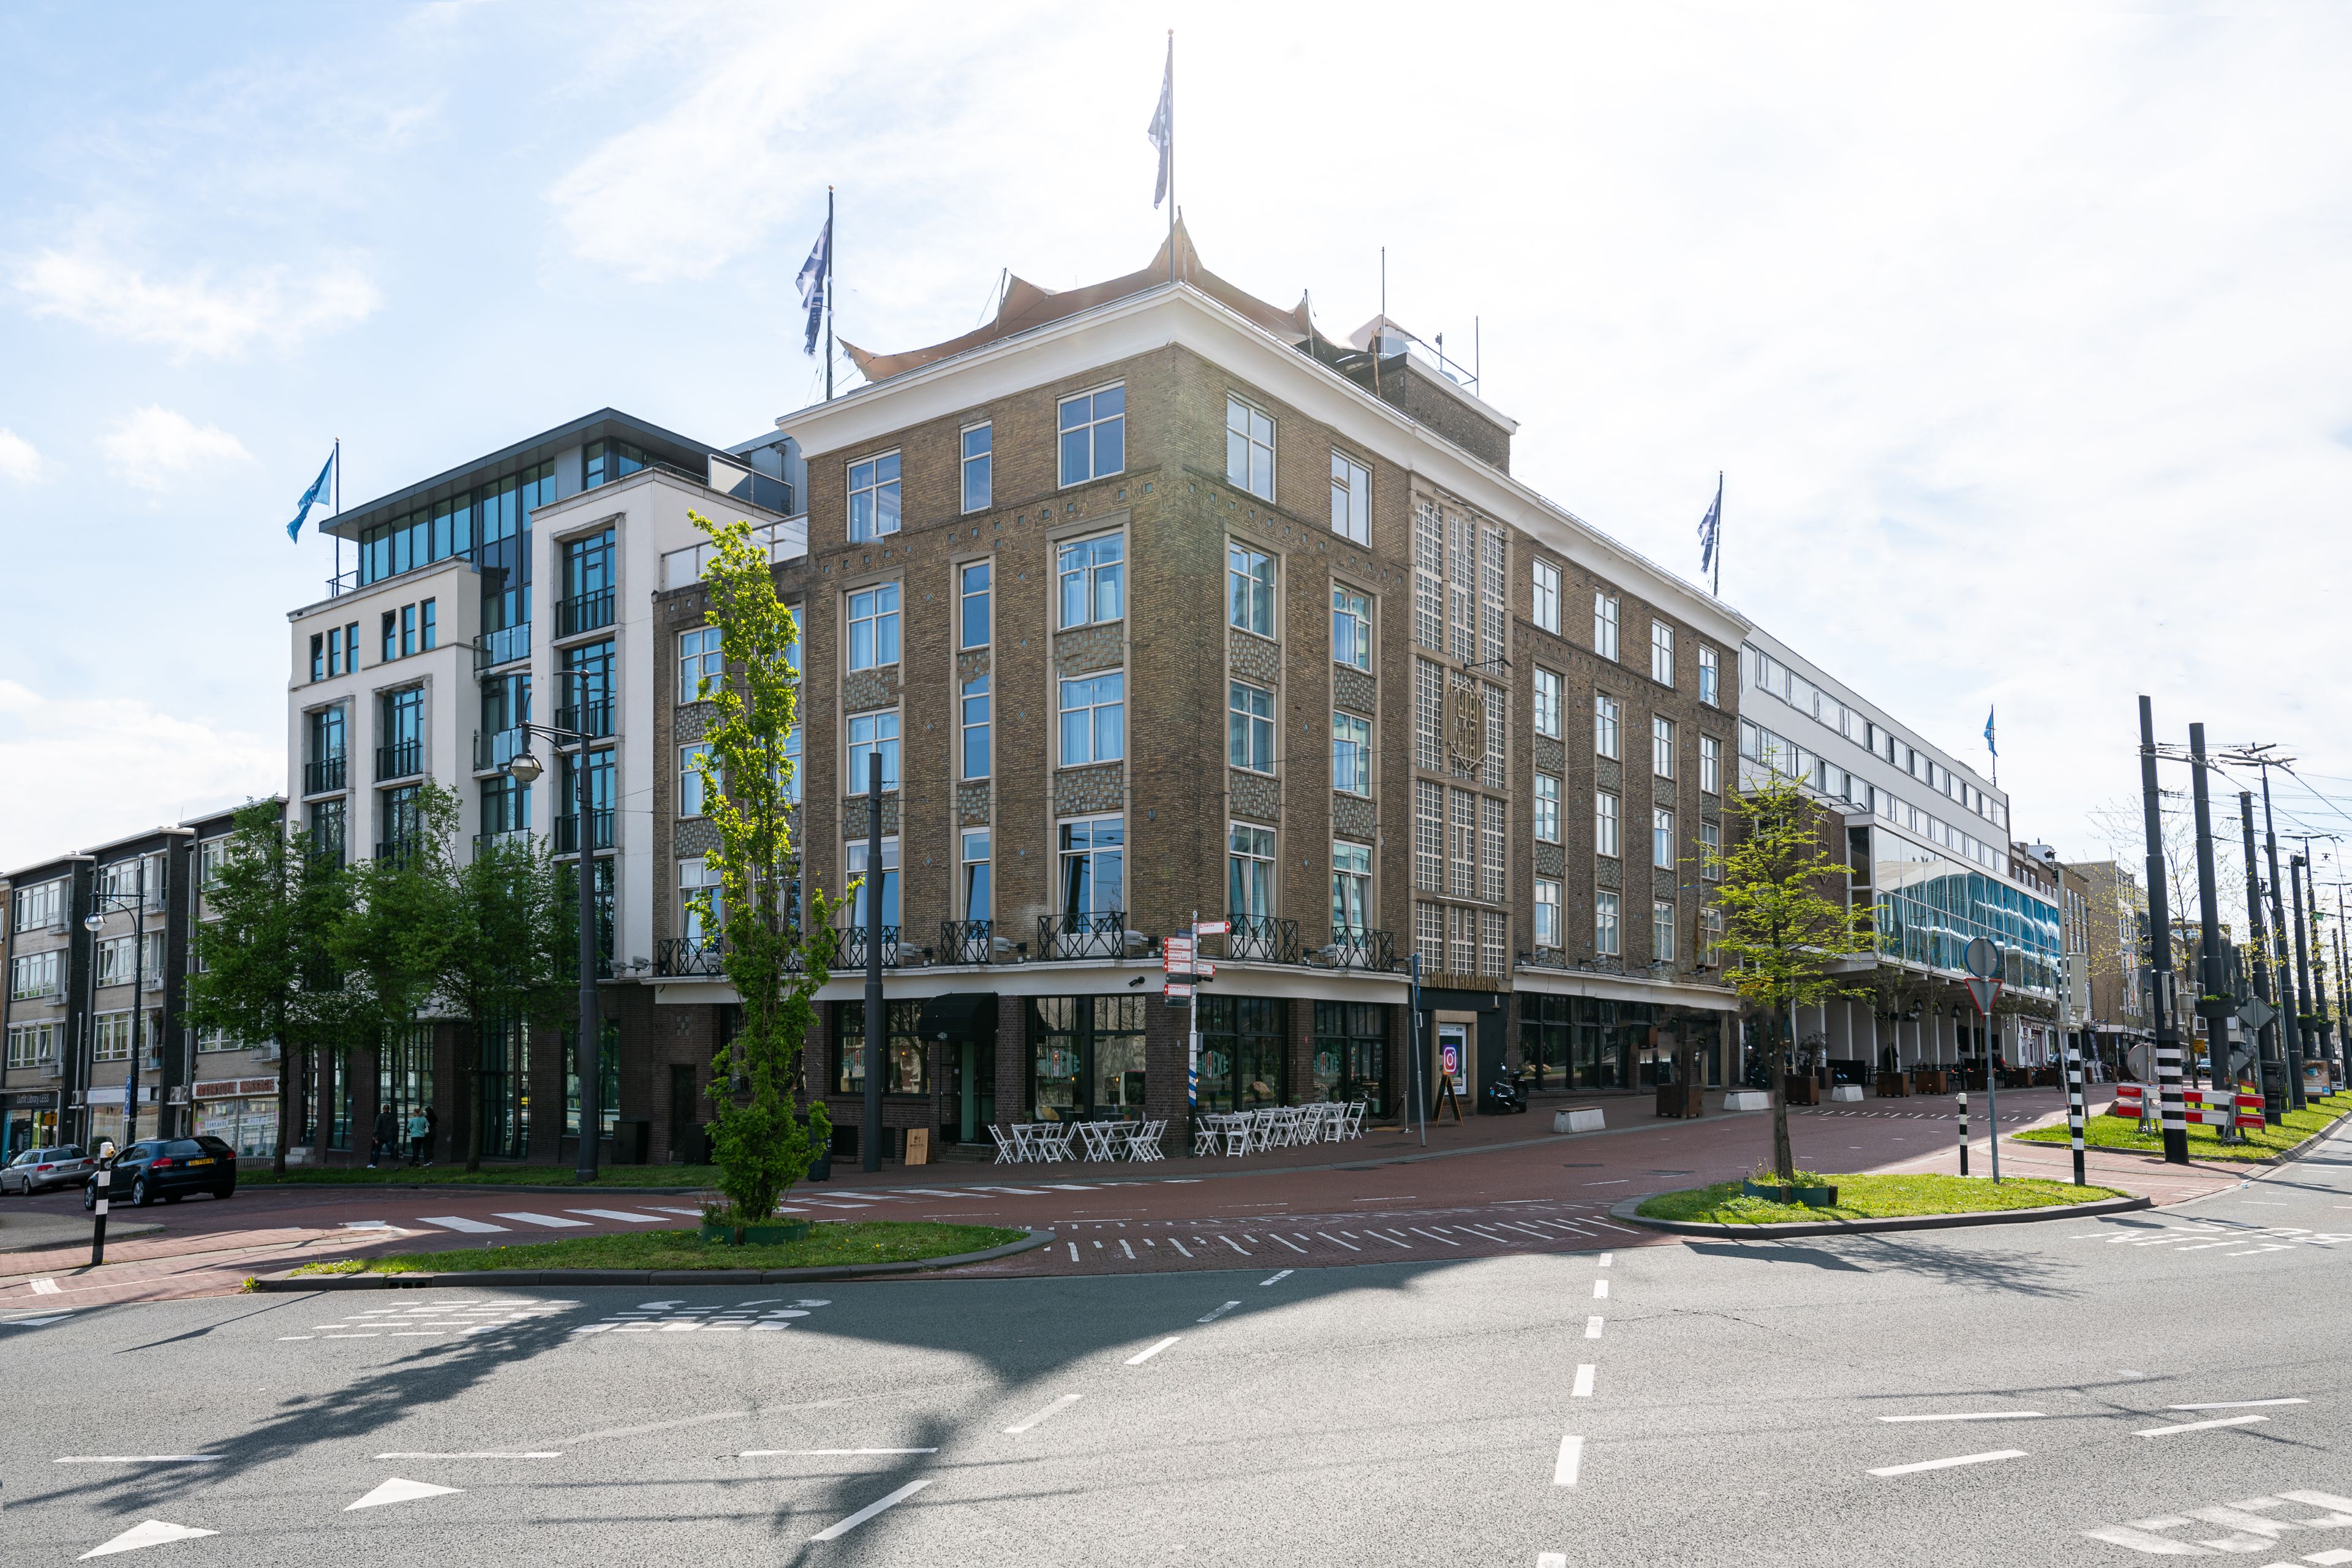 Hotel Haarhuis <br/>99.00 ew <br/> <a href='http://vakantieoplossing.nl/outpage/?id=21410e3e58e899b9bdad1b48cef8d98d' target='_blank'>View Details</a>